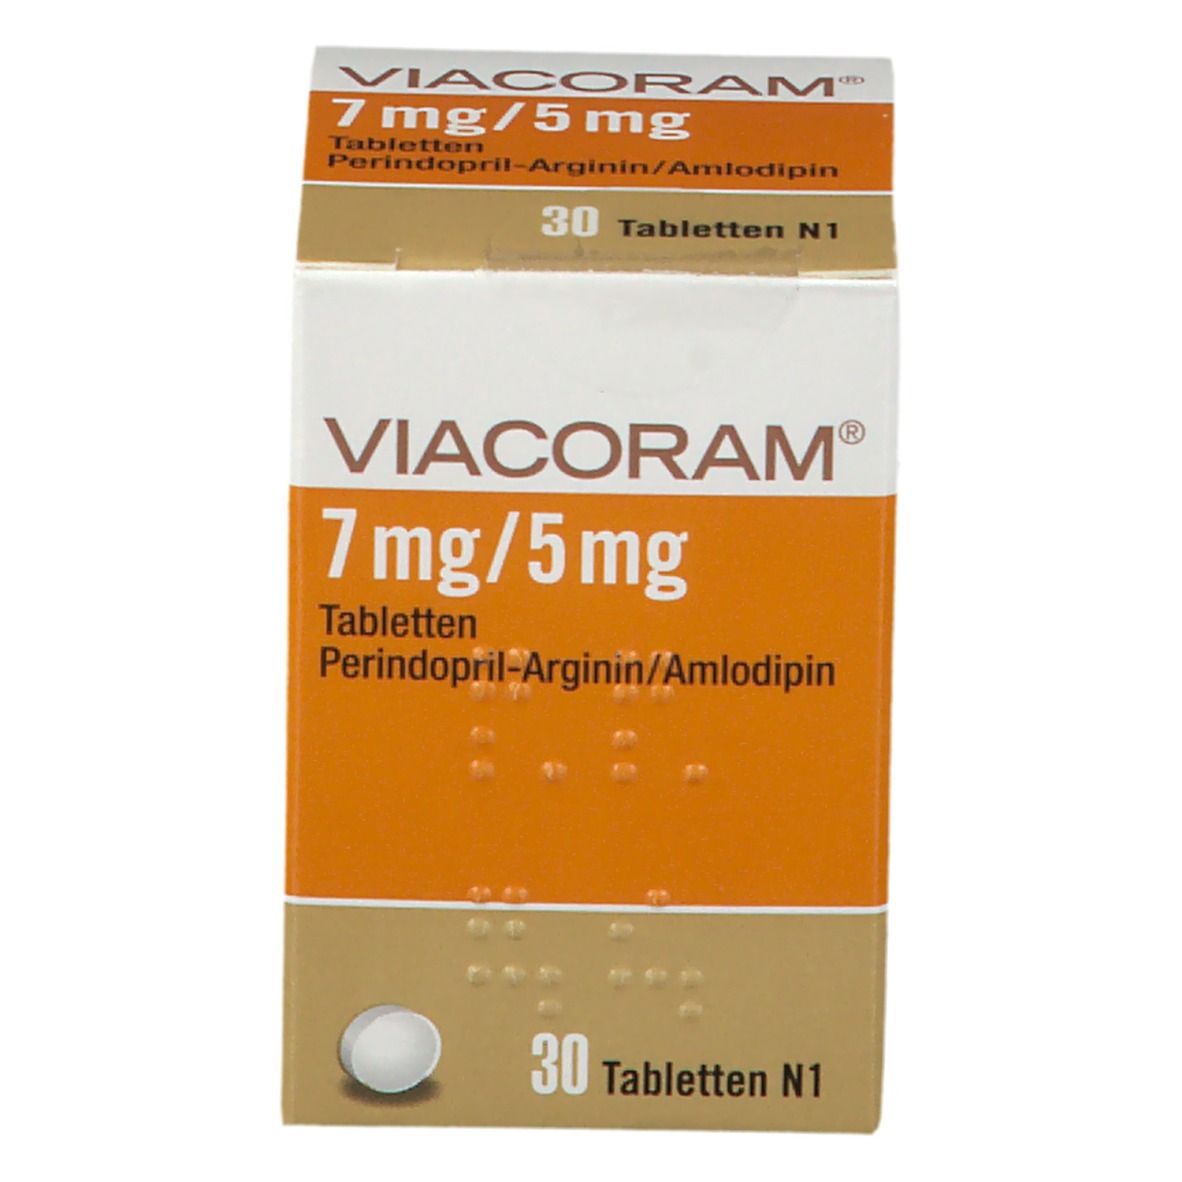 VIACORAM® 7 mg/ 5 mg